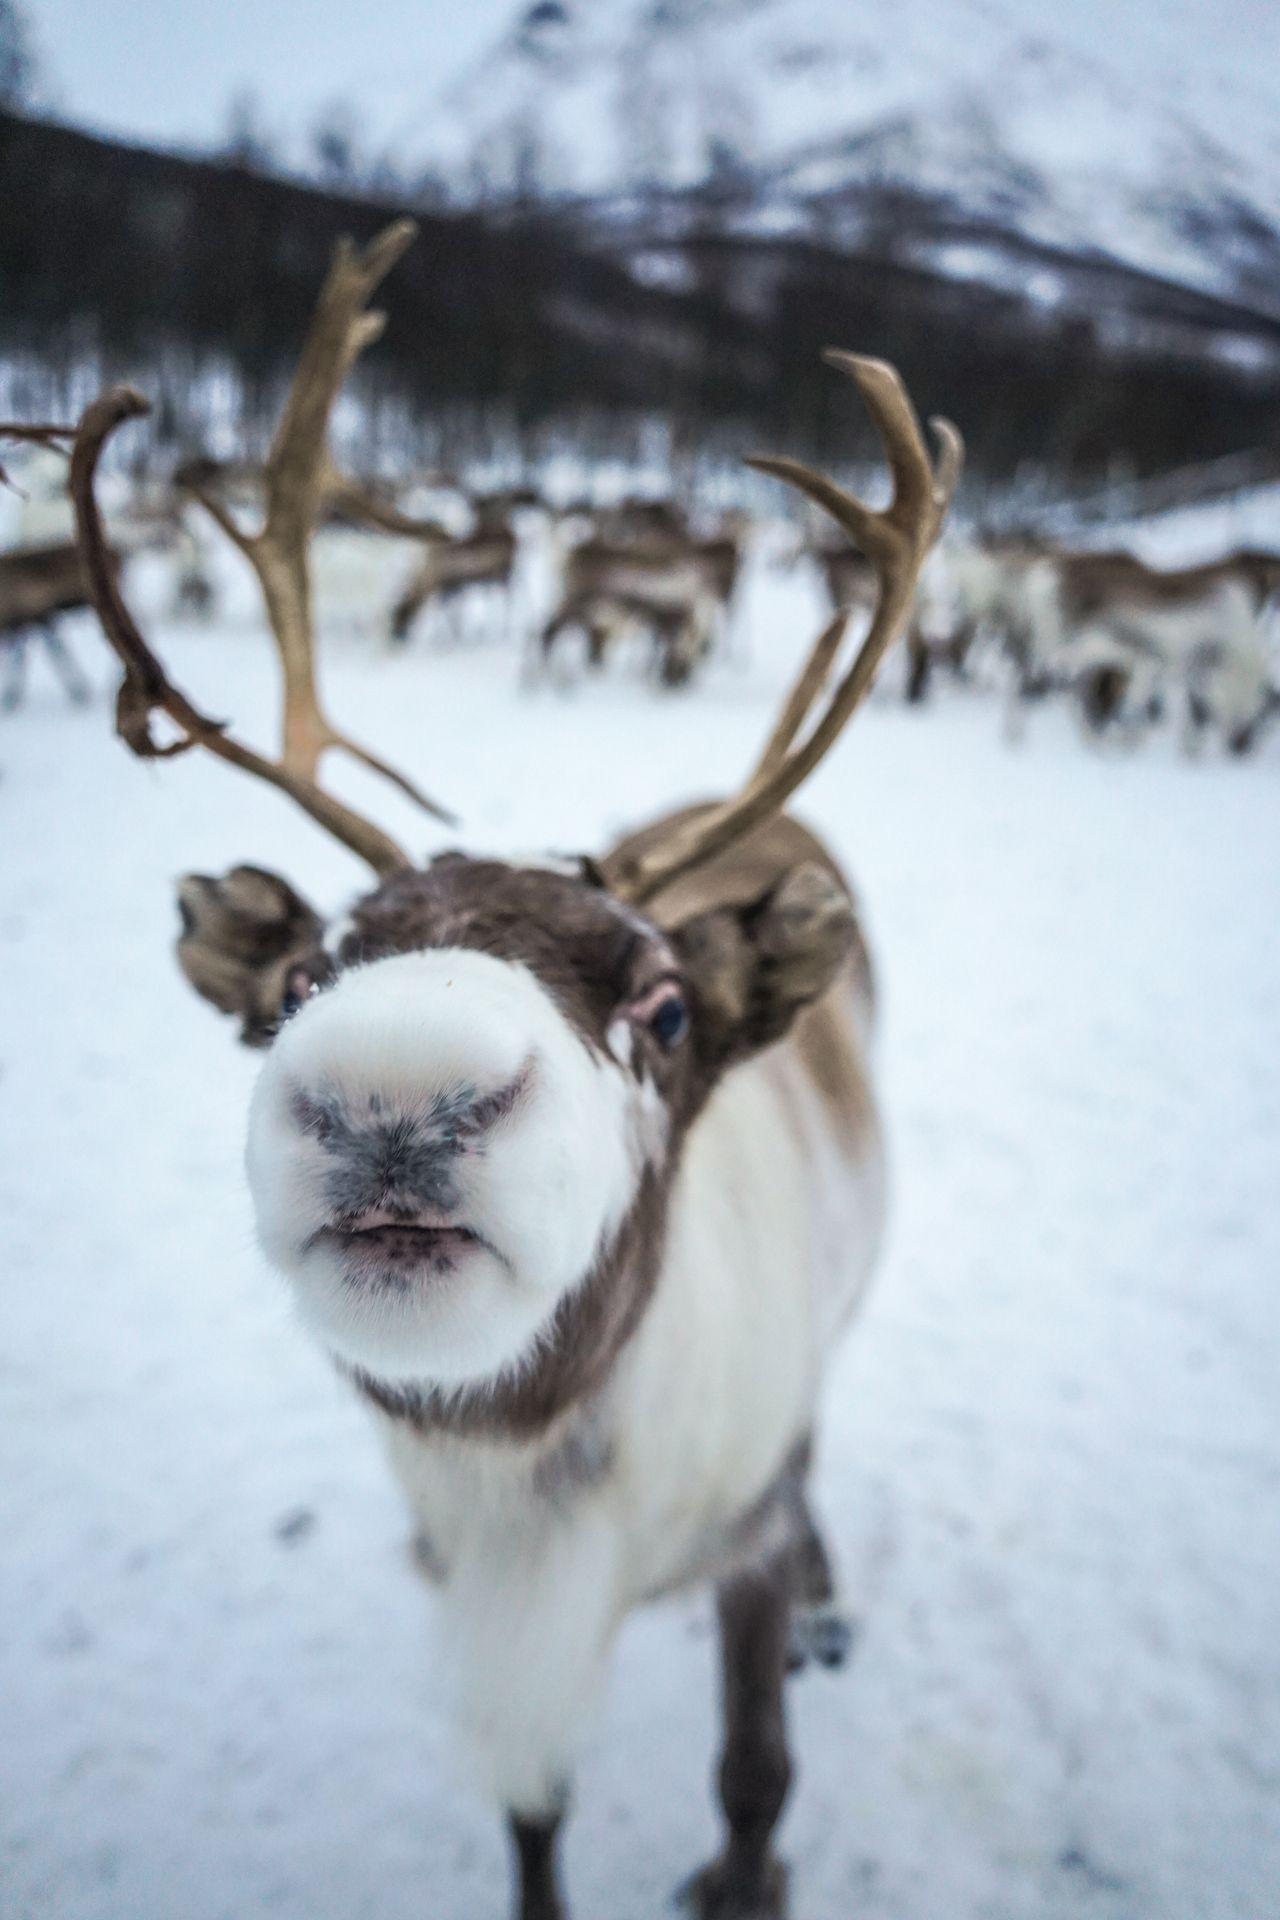 A close up look at a reindeer's face